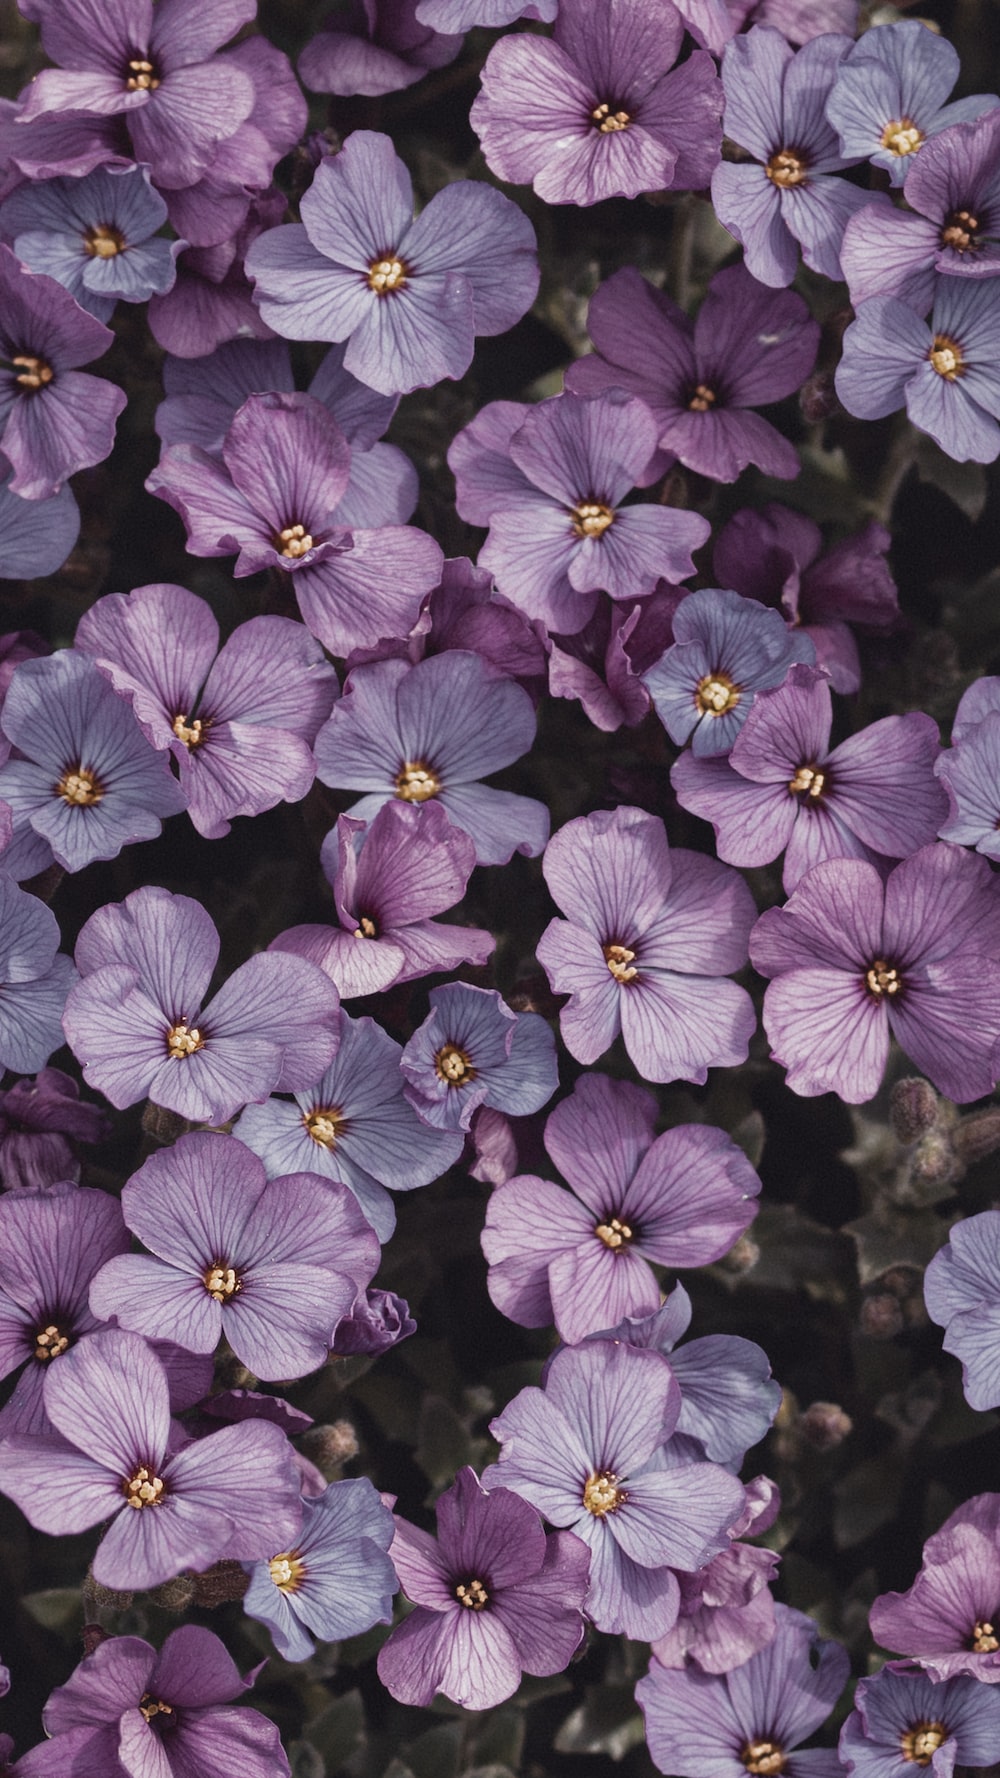 Aesthetic Purple Flower Wallpapers